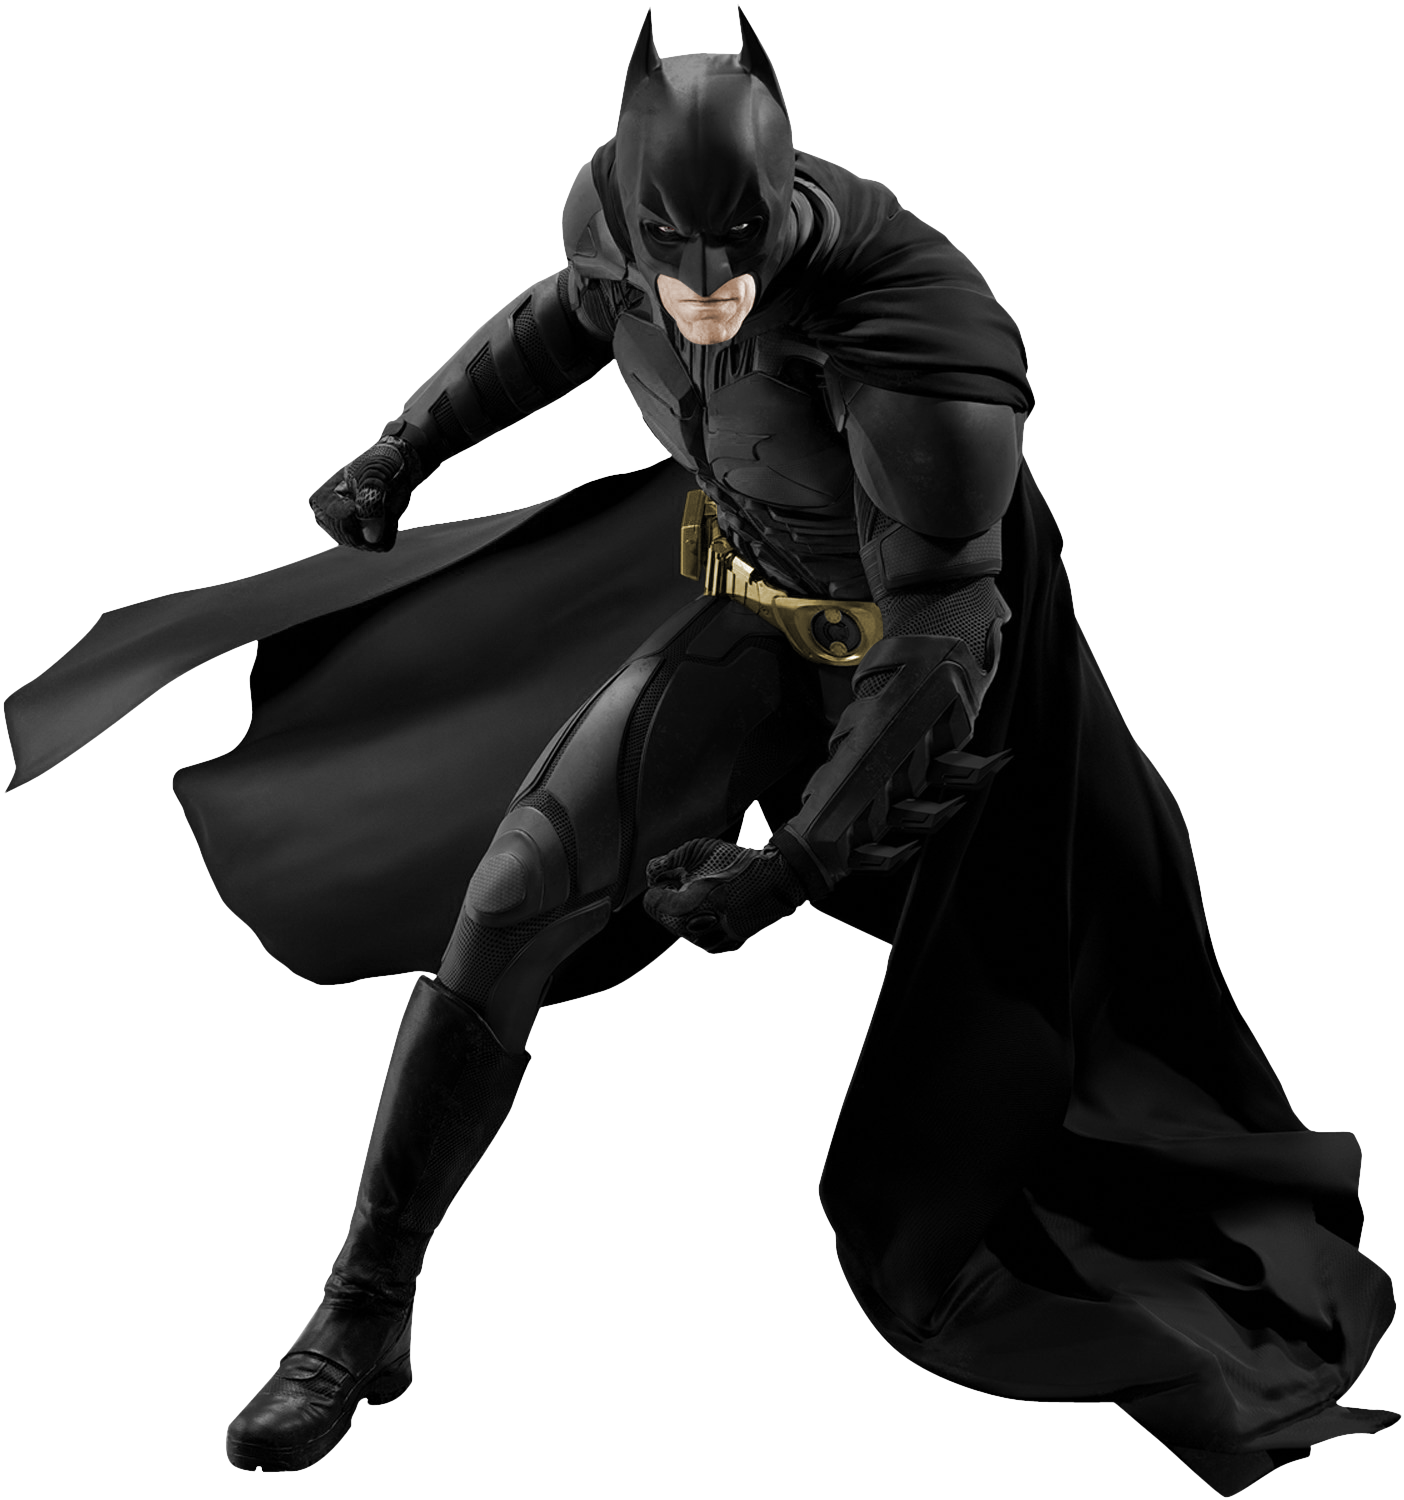 Gelap Knight Batman PNG Gambar berkualitas tinggi